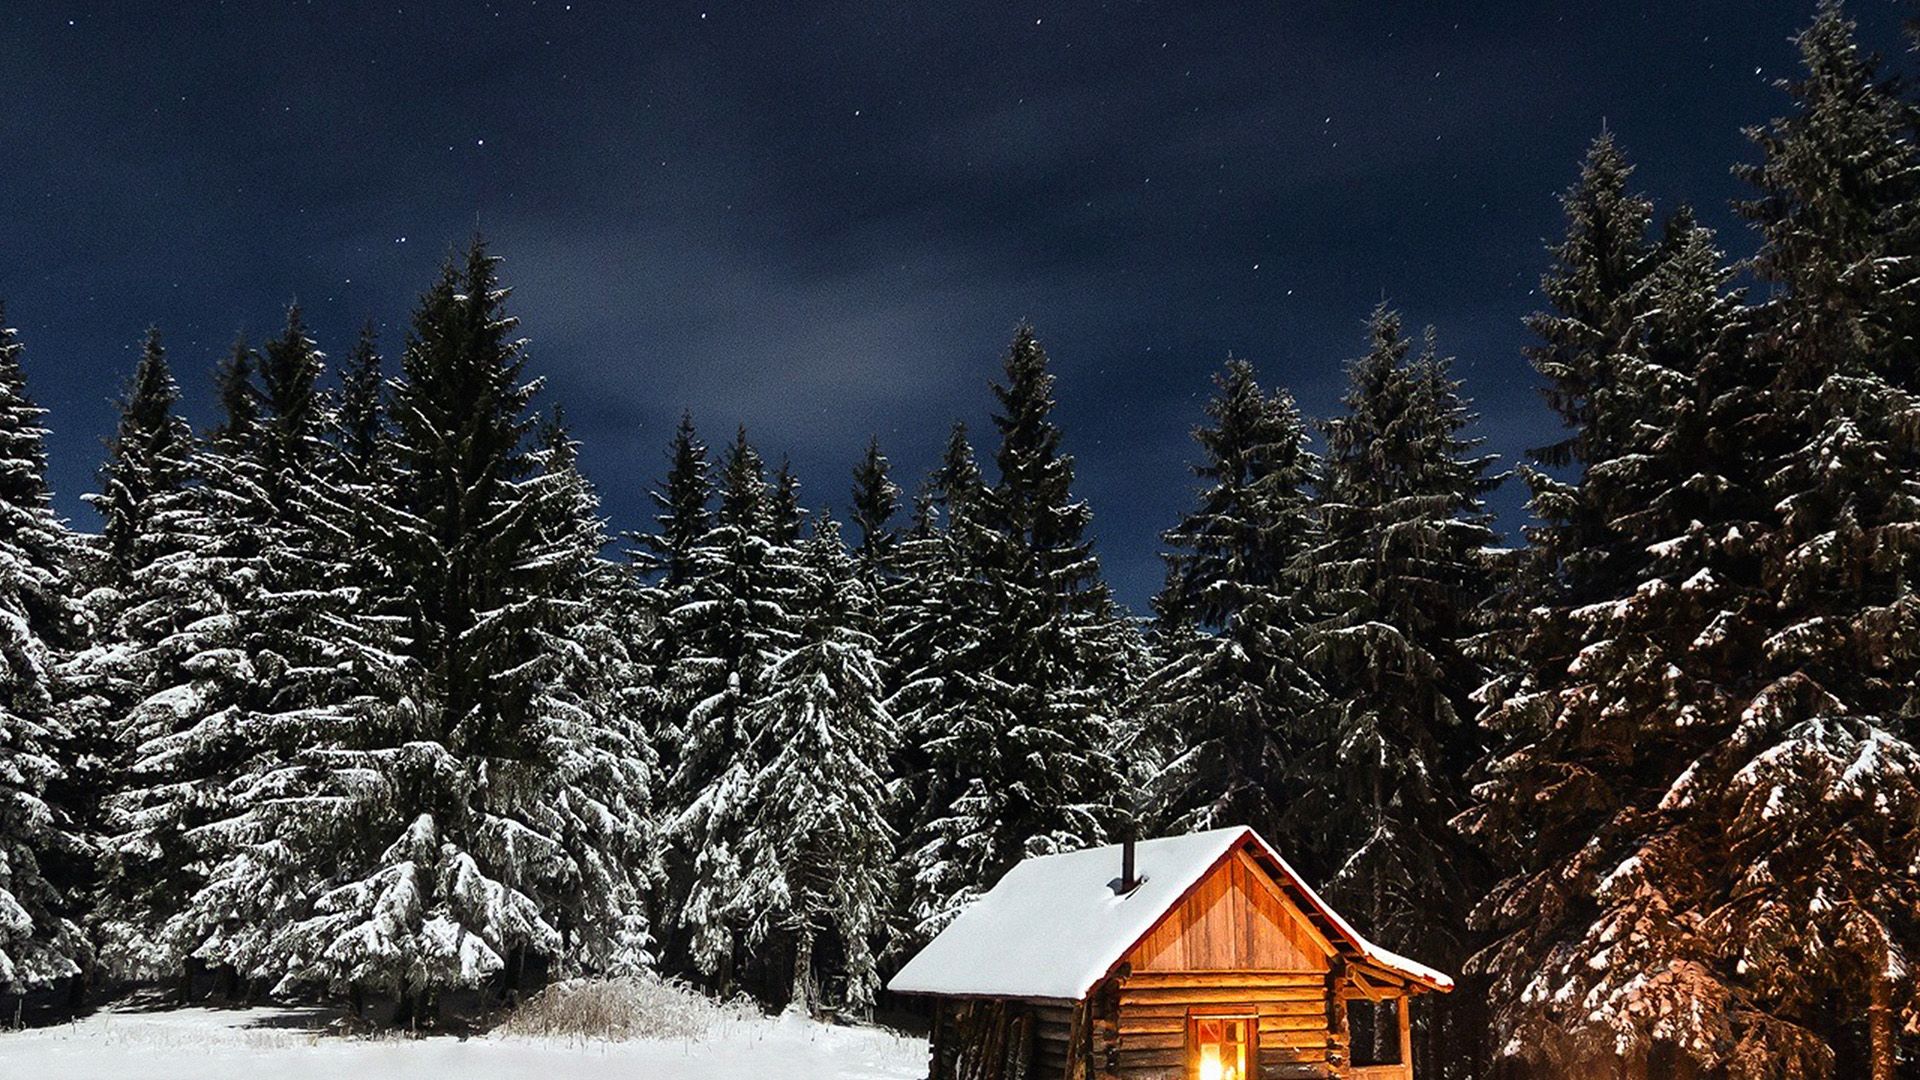 Winter House Night Sky Christmas Wallpaper